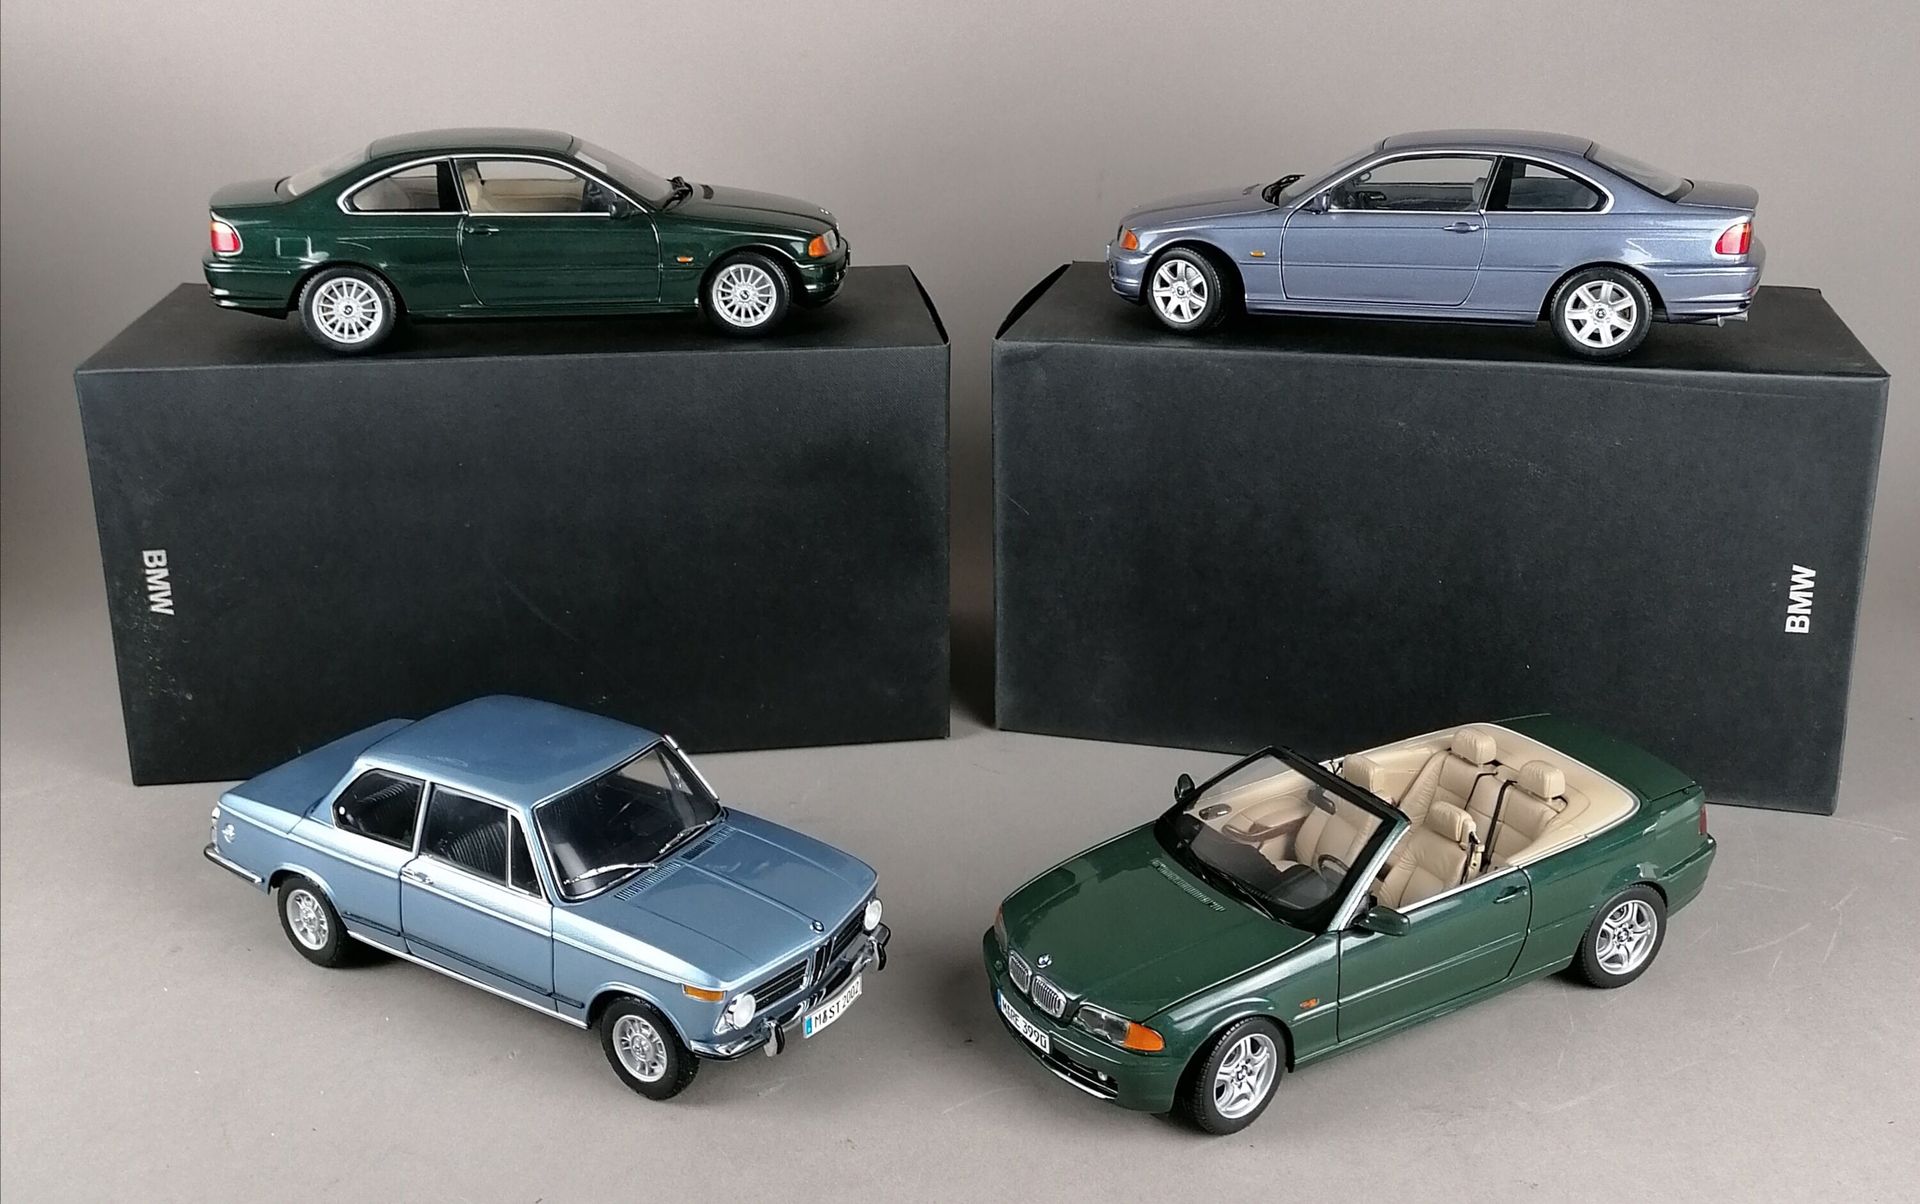 Null BMW - QUATRE BMW échelle 1/18 :

1x 3Series Cabrio

1x 2002 Til

1x 328Ci

&hellip;